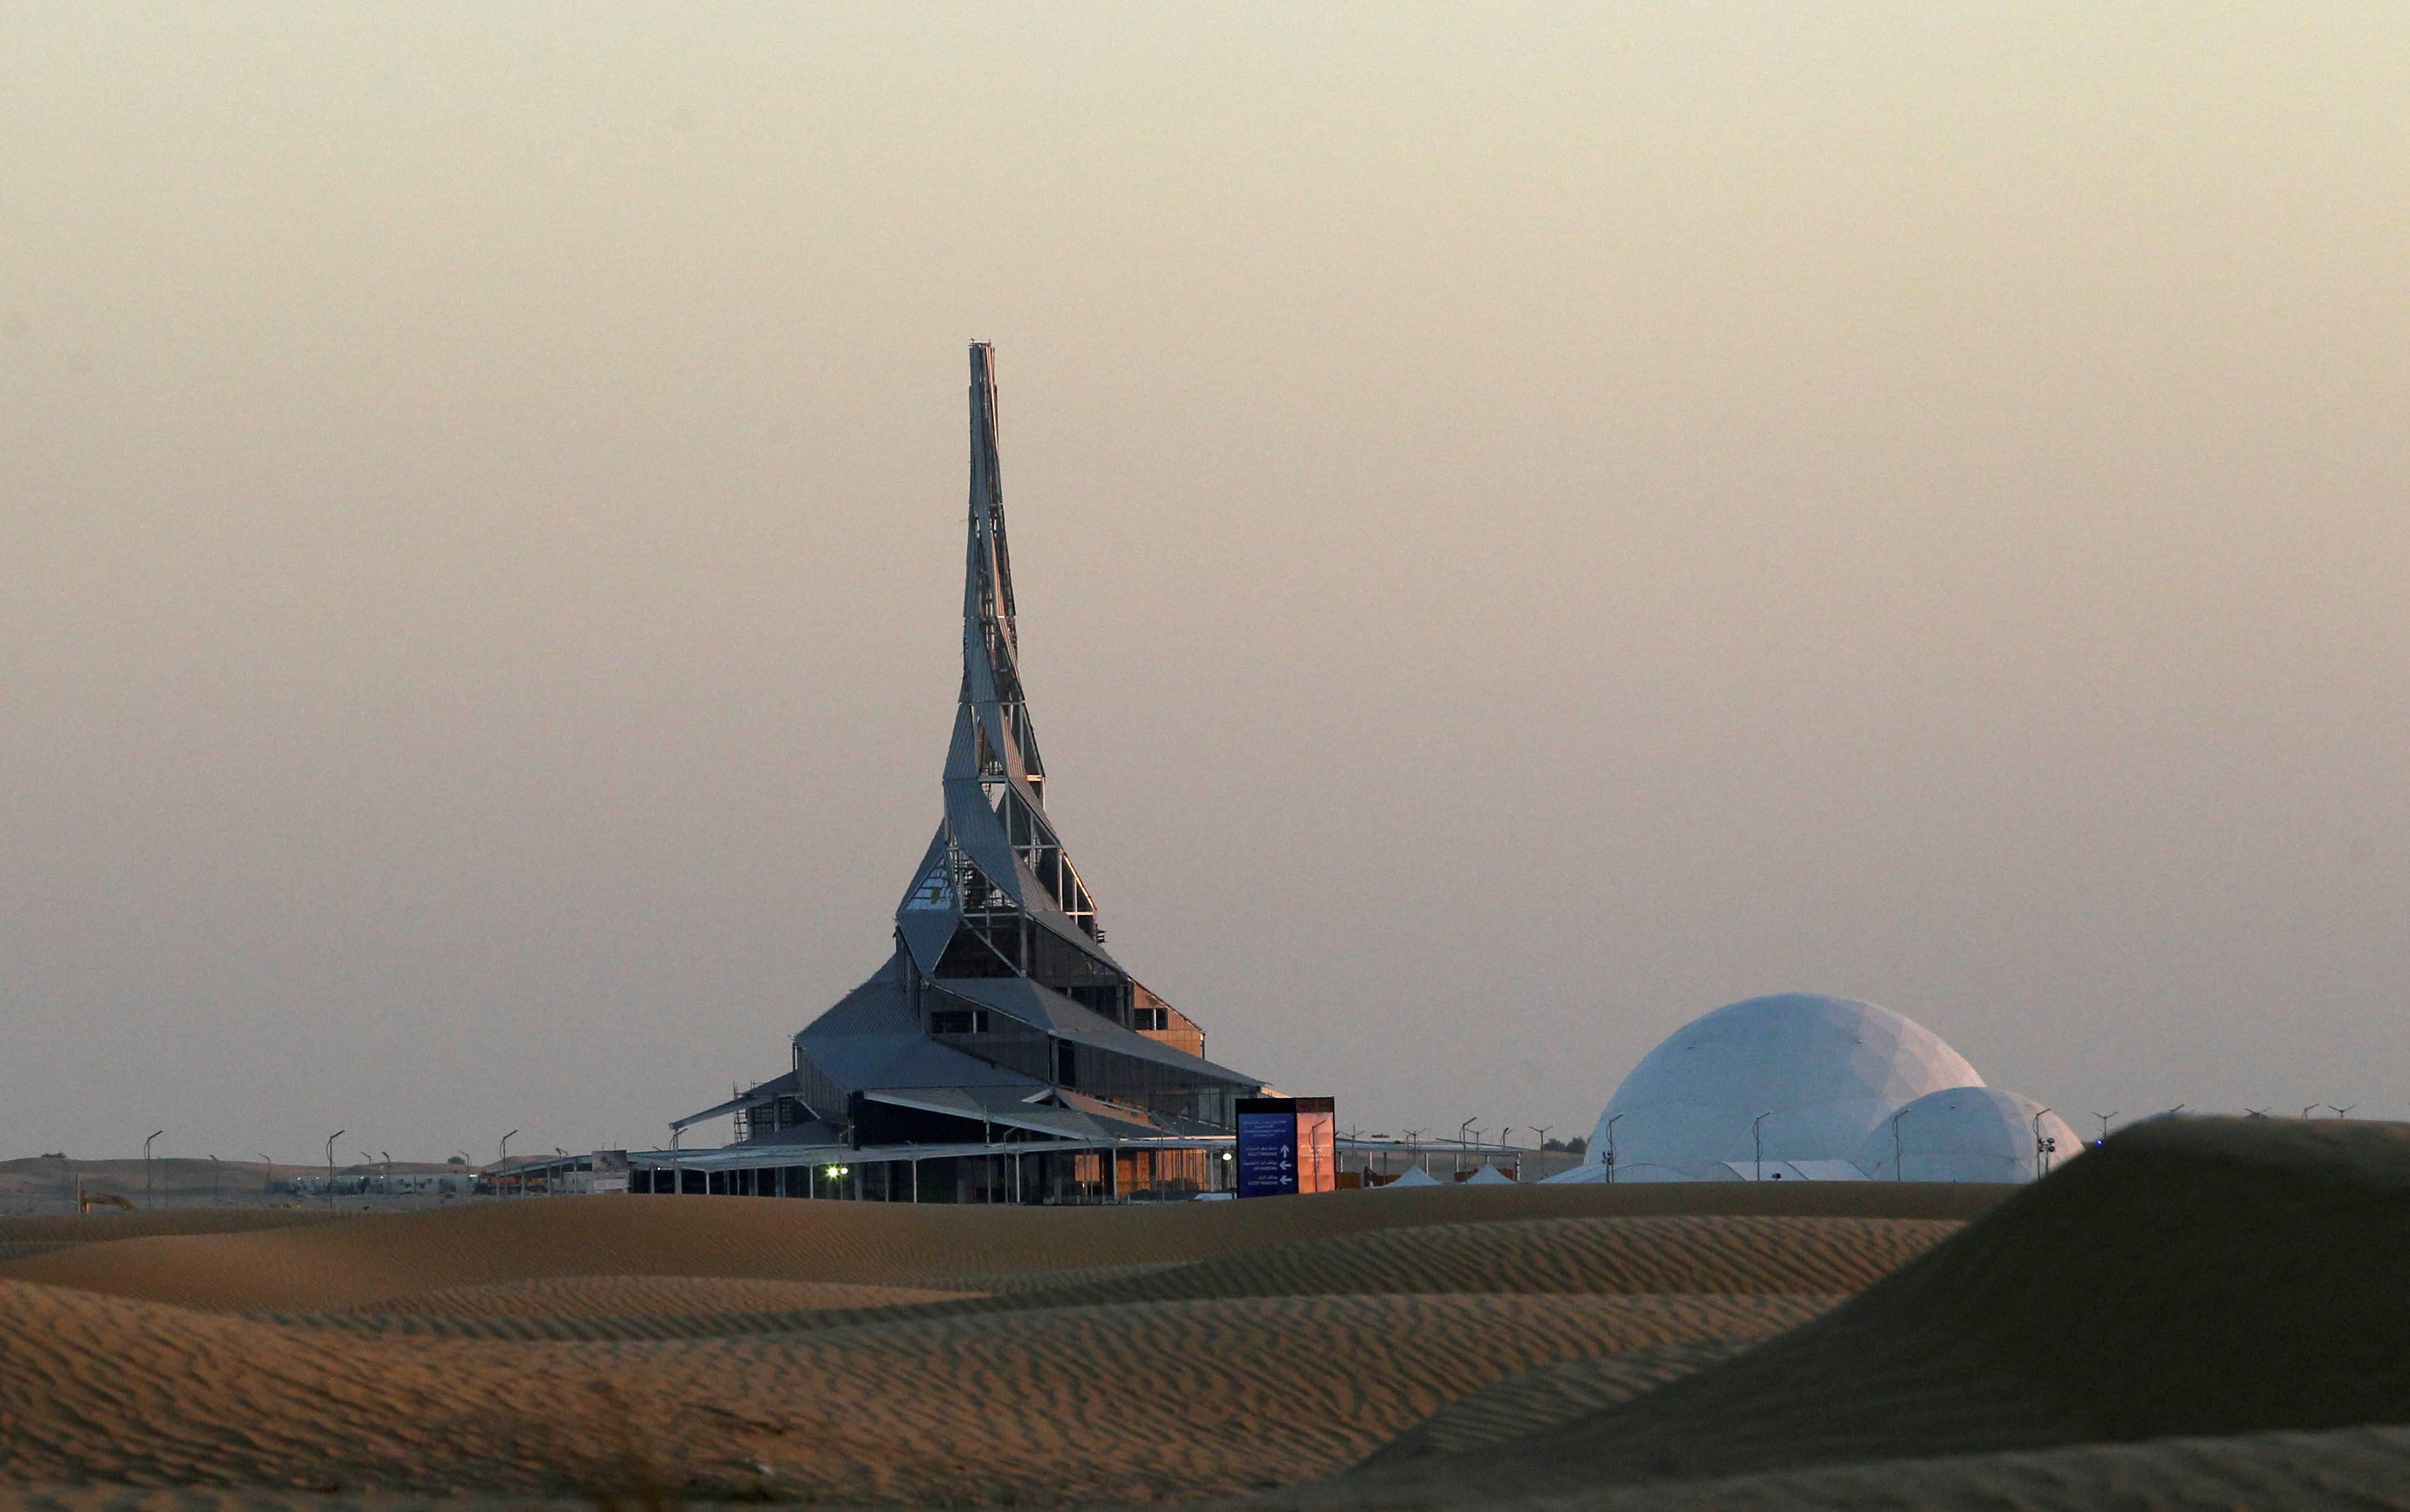 View shows the Mohammed bin Rashid Al Maktoum Solar Park, south of Dubai